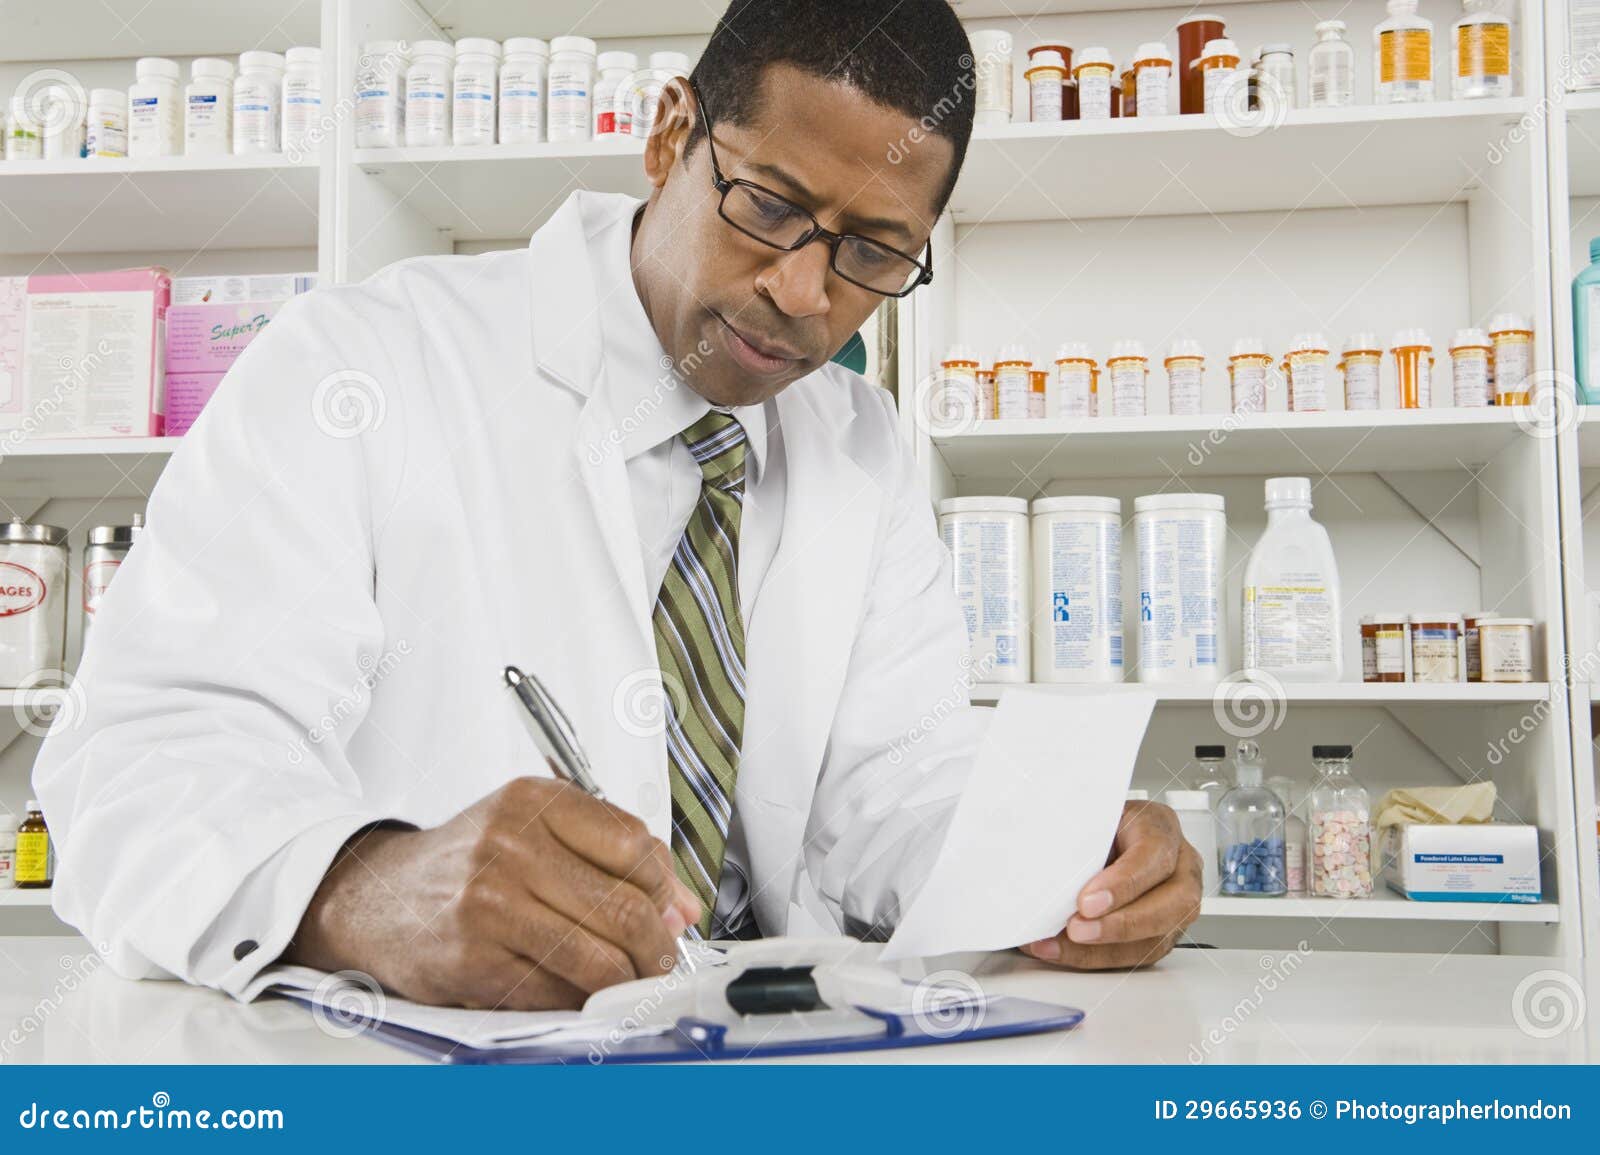 male pharmacist working in pharmacy